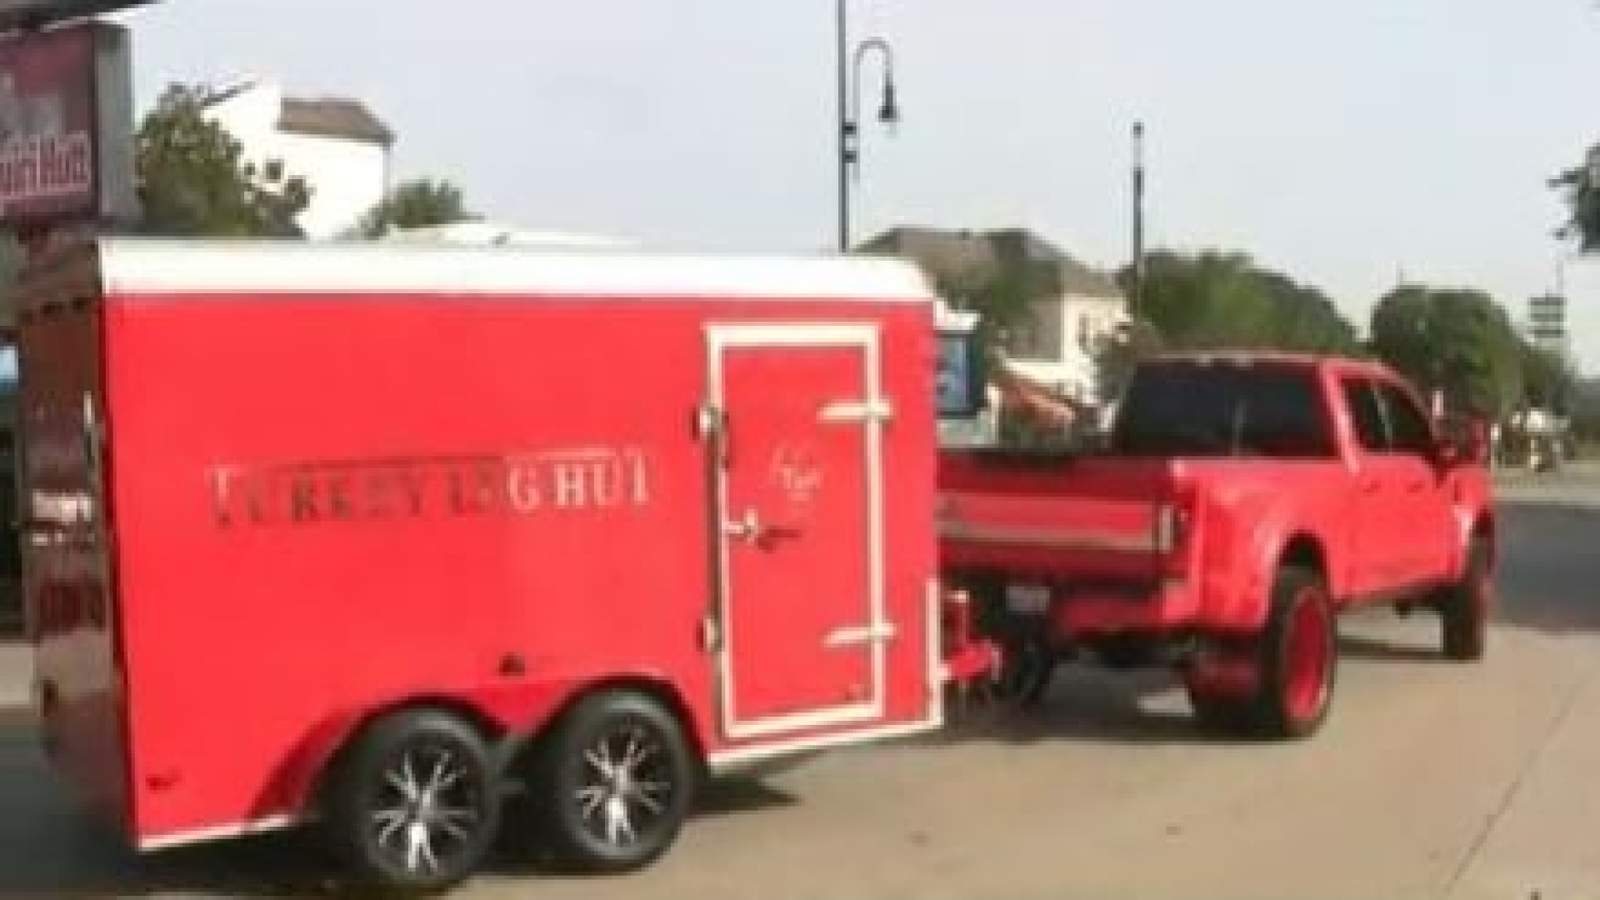 Turkey Leg Hut delivers 1,000 turkey legs, supplies to help hurricane victims in Lake Charles